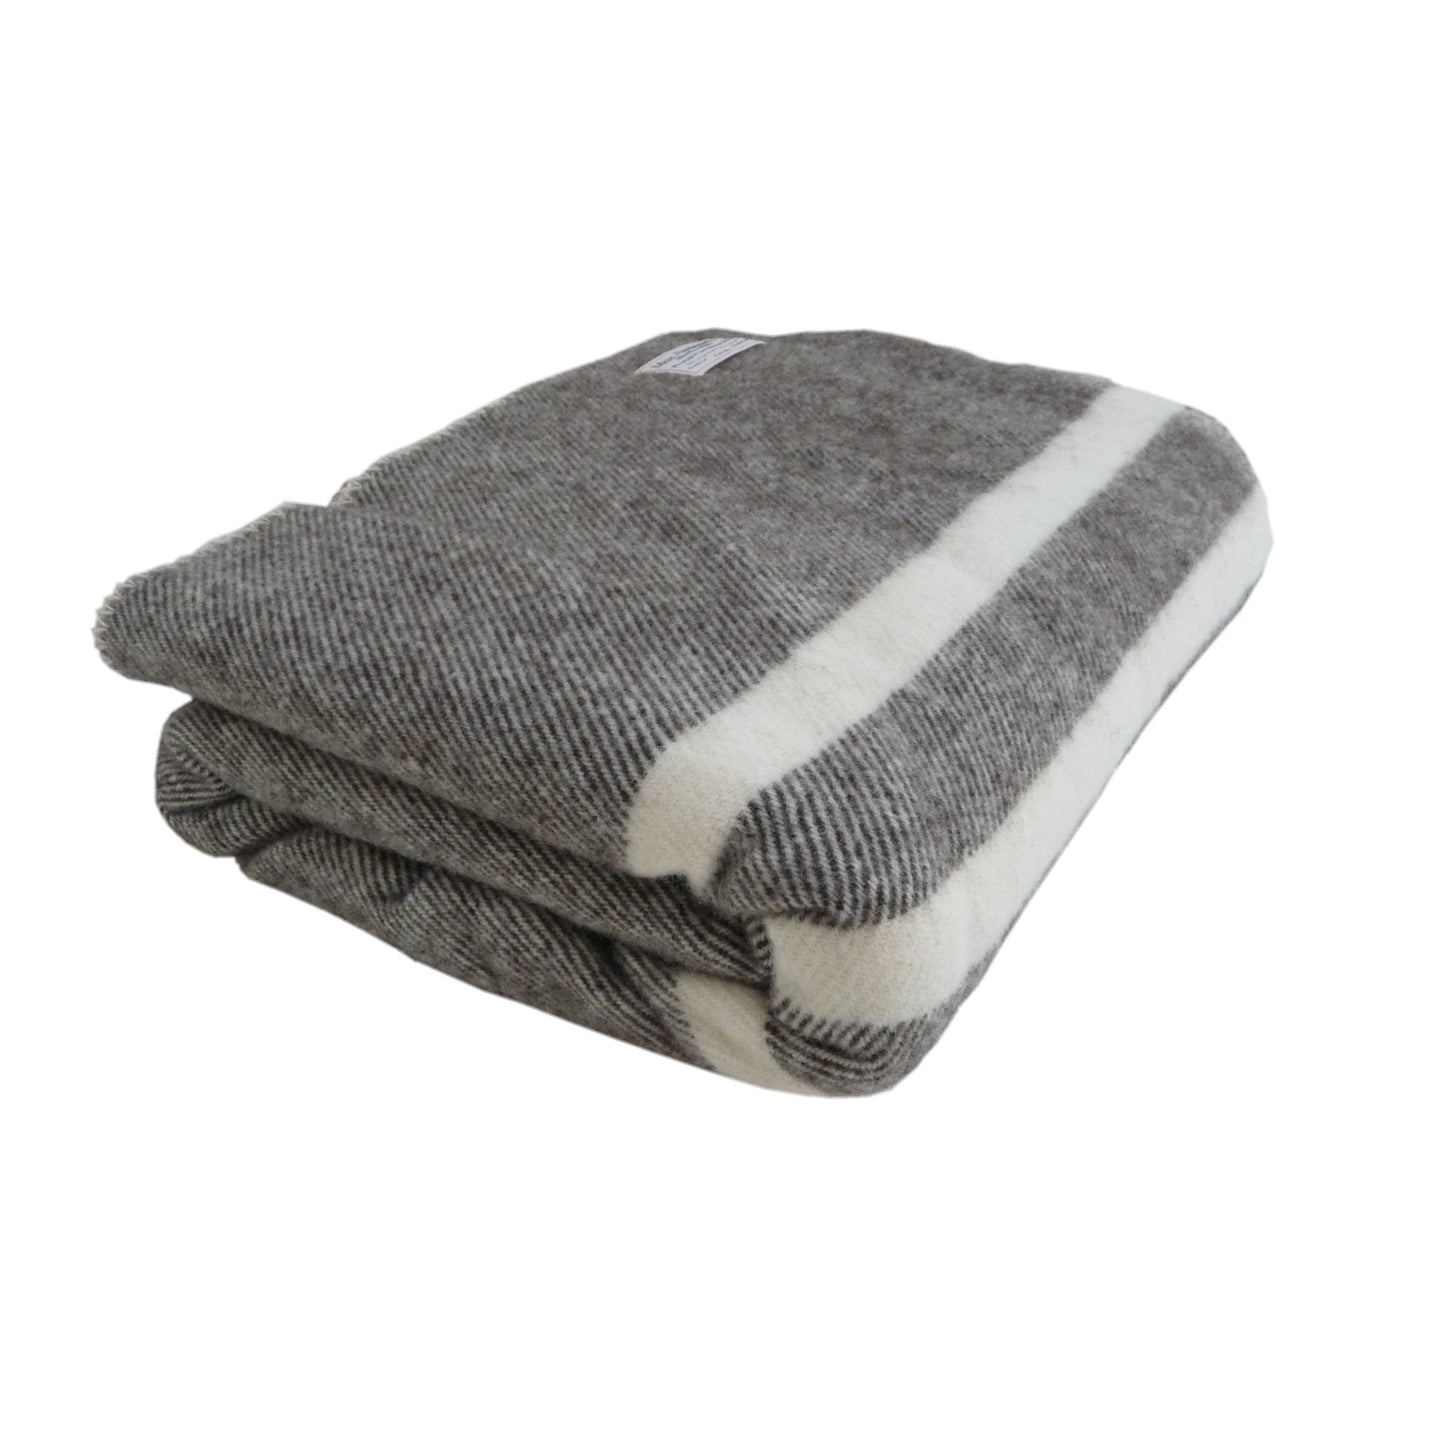 MacAusland's Wool Blanket